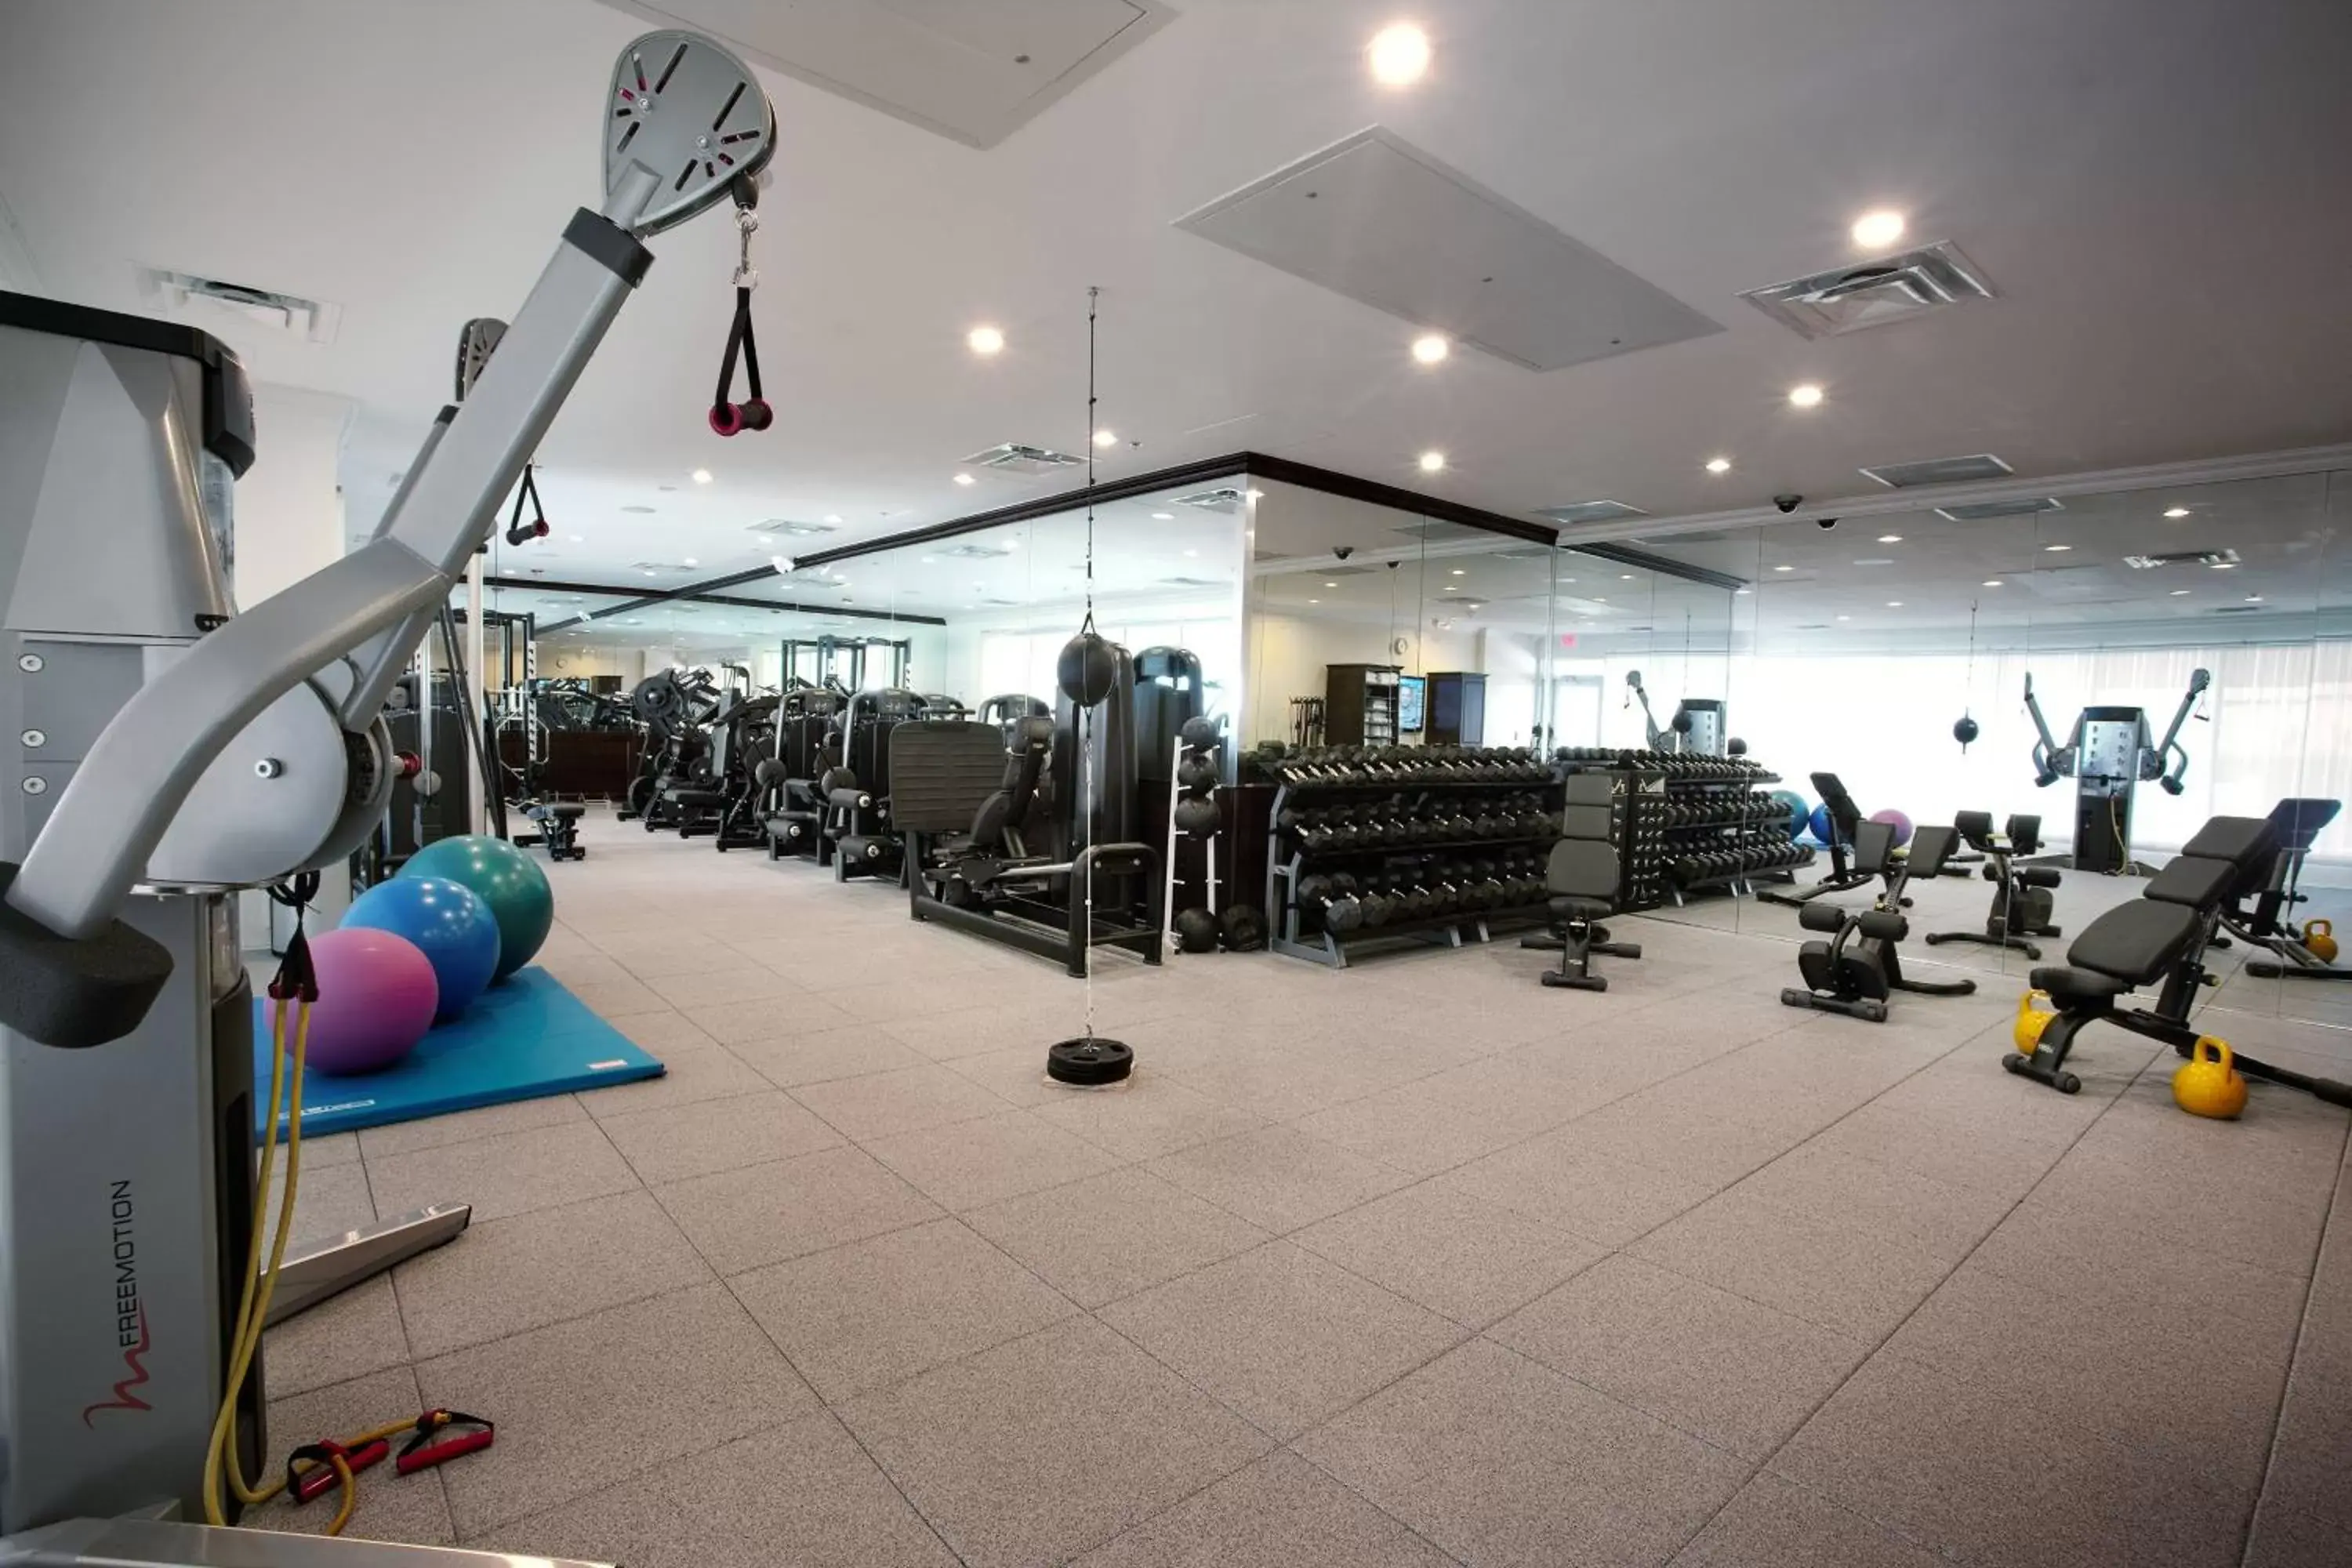 Fitness centre/facilities, Fitness Center/Facilities in Miami Marriott Dadeland